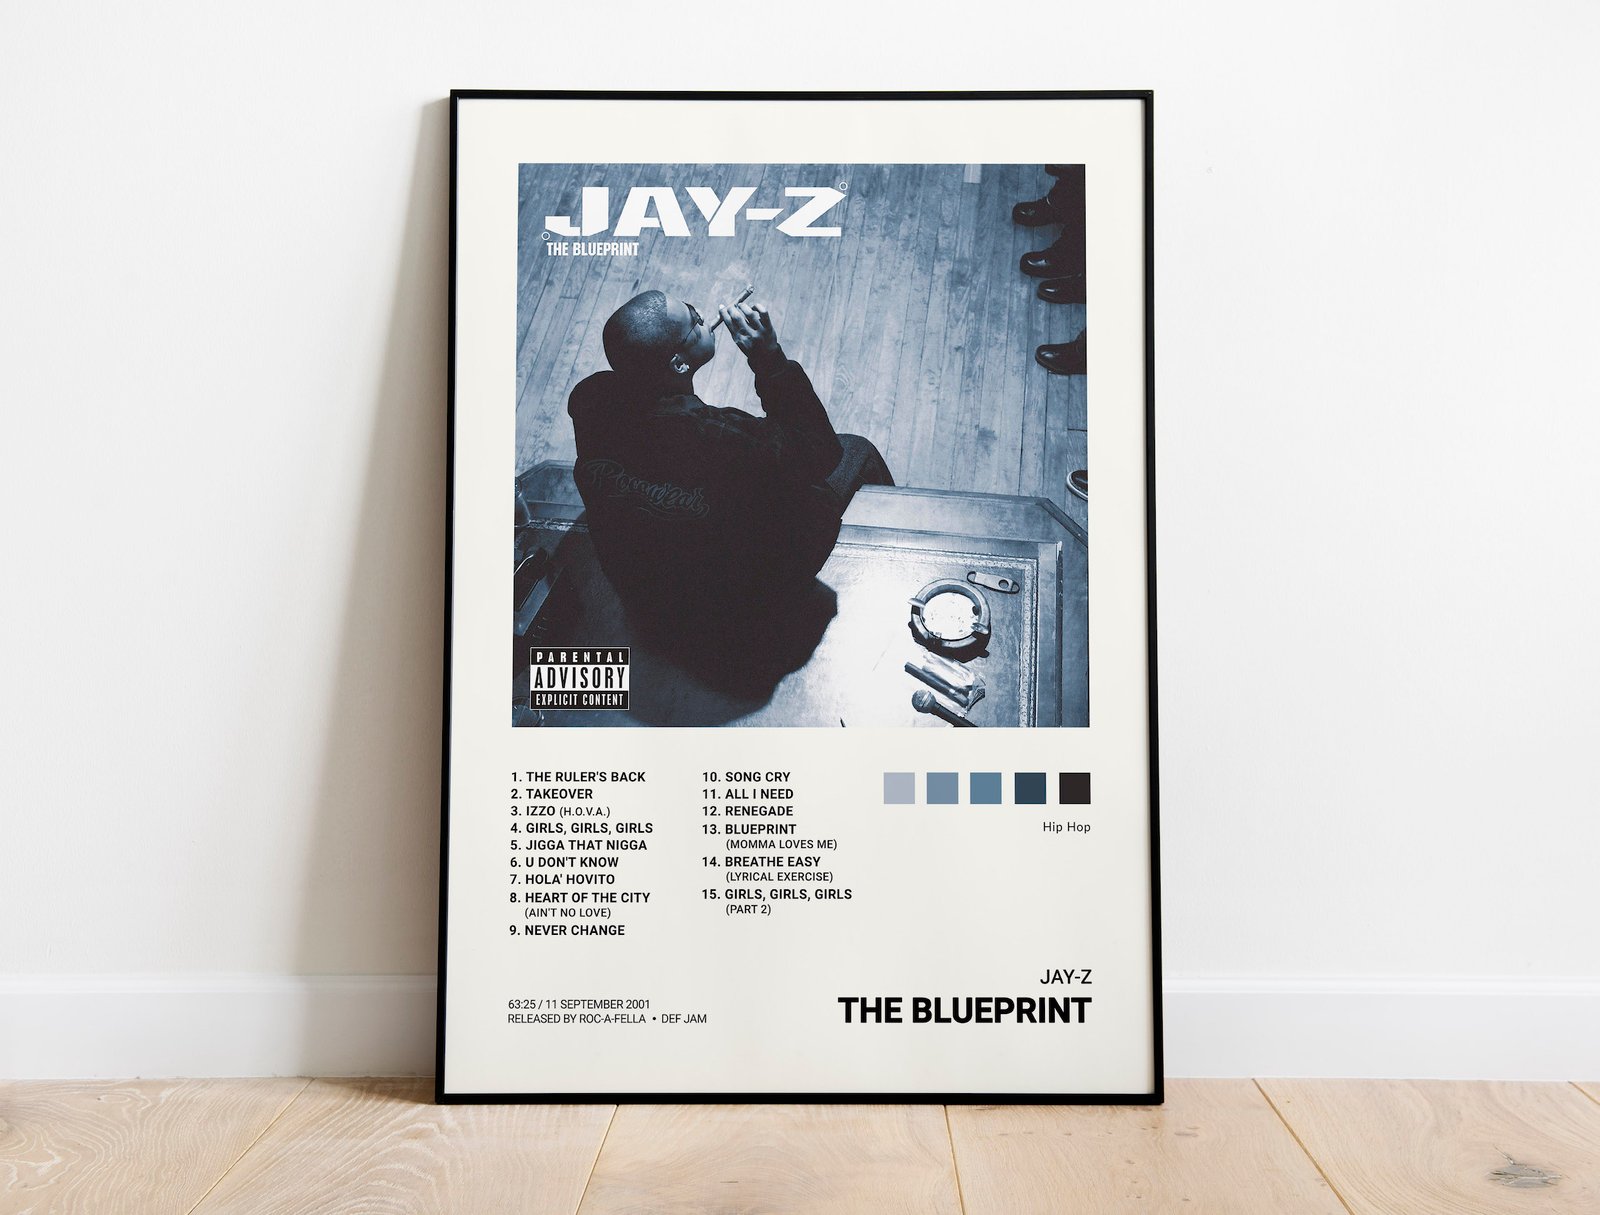 jay z the blueprint 3 album download